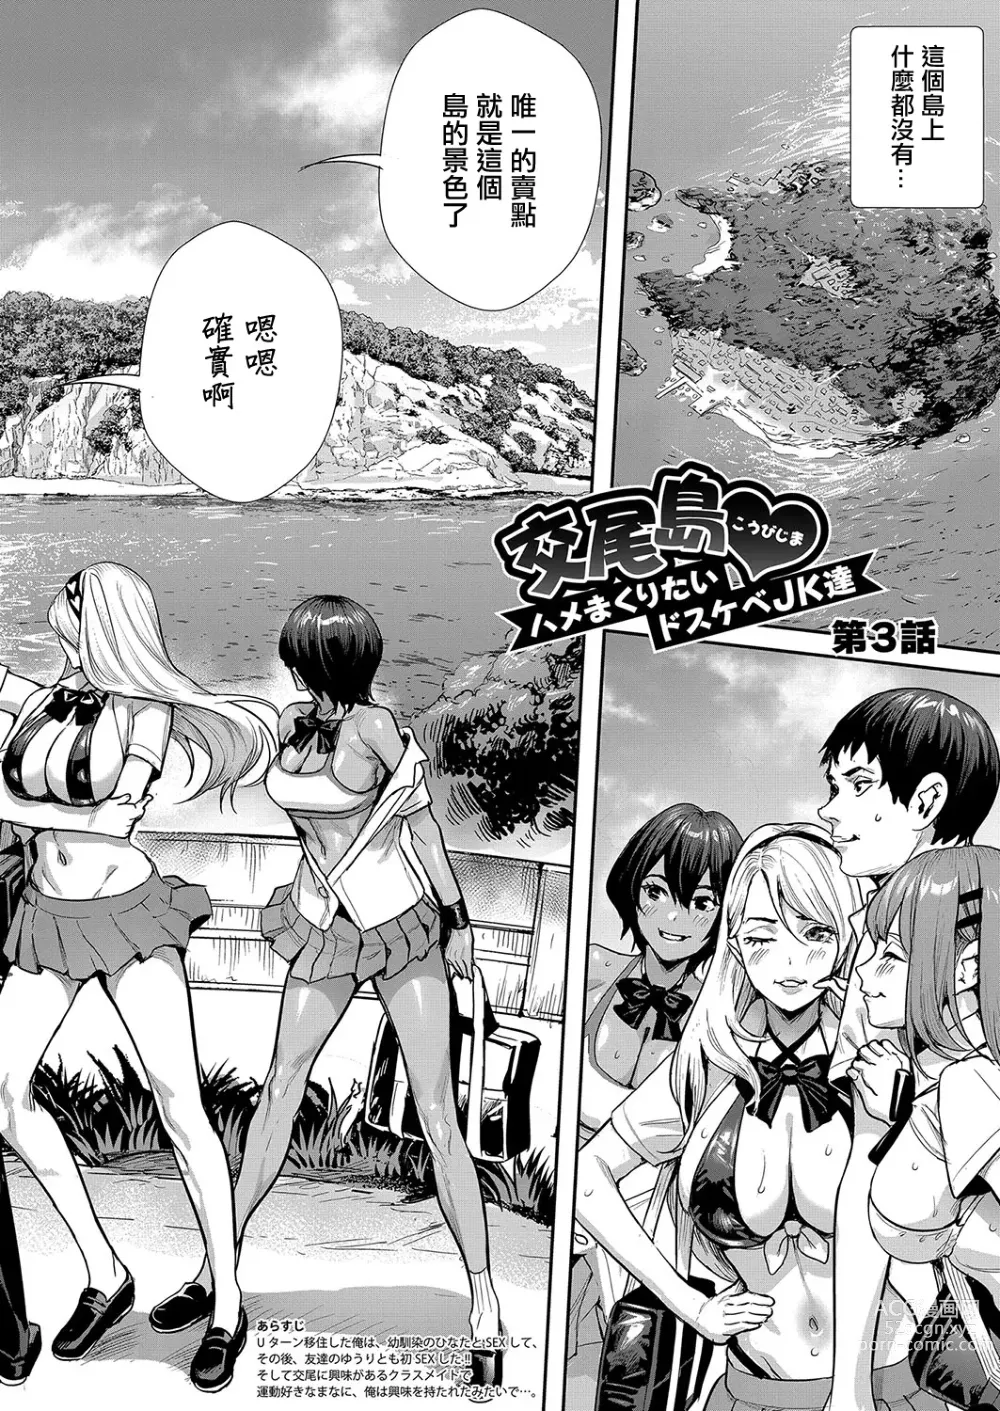 Page 2 of manga Koubijima Hame Makuritai Dosukebe JK-tachi Ch. 3